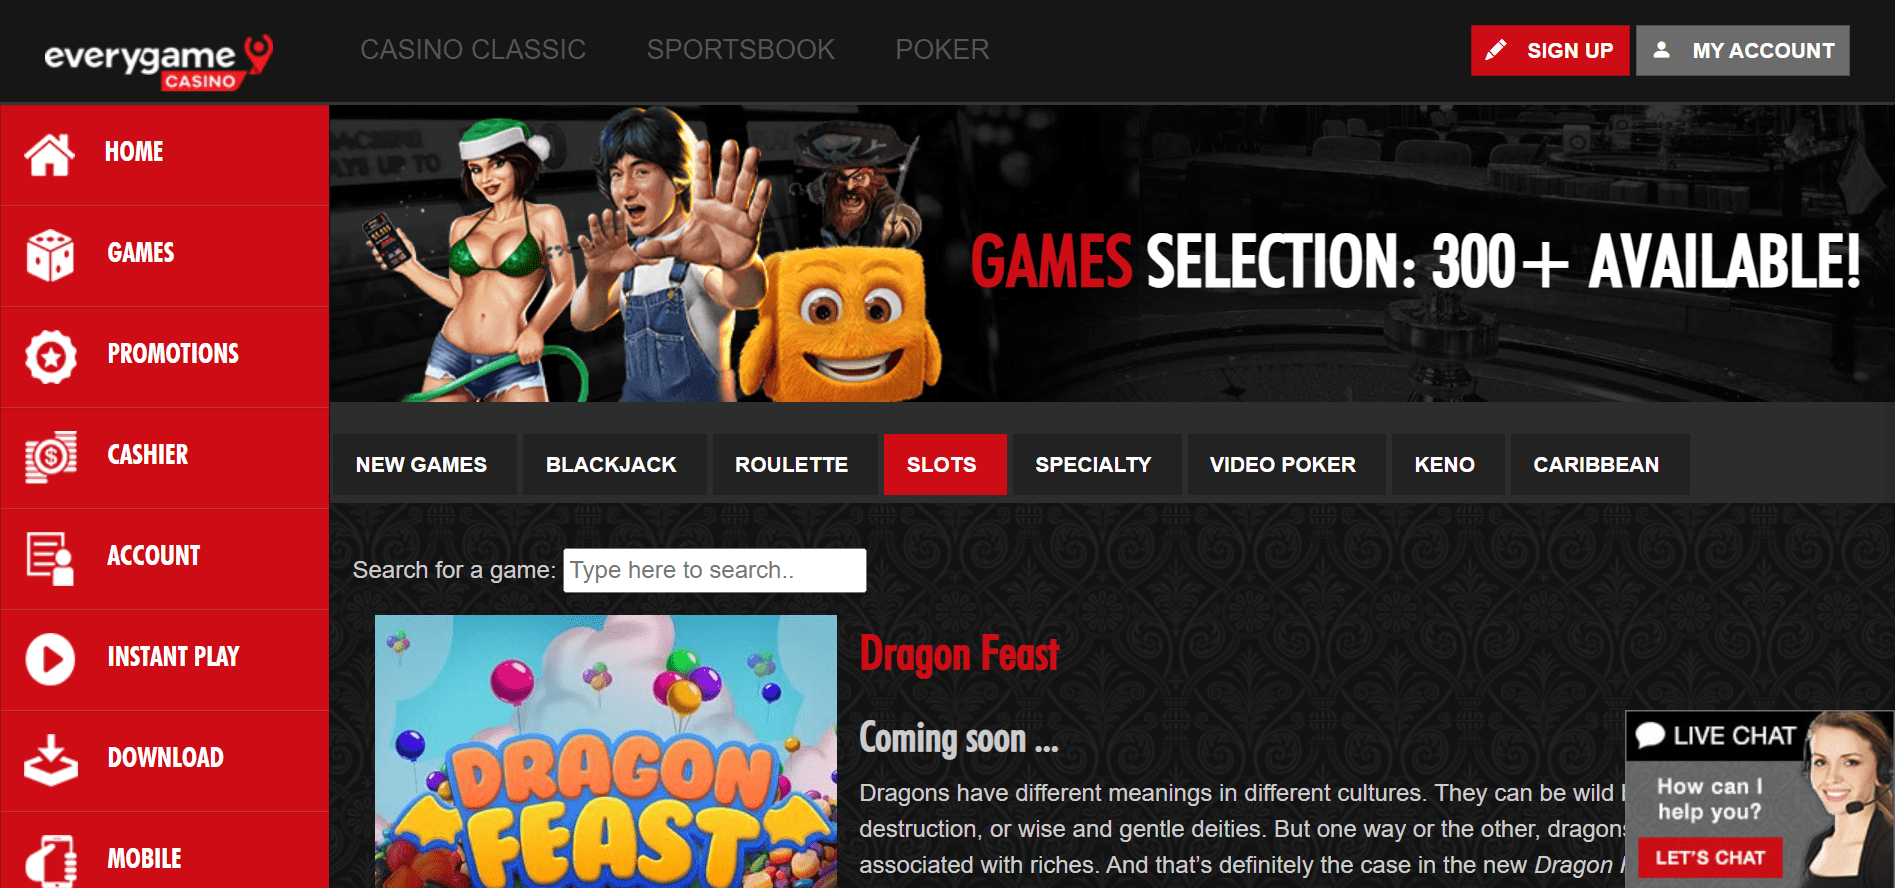 everygame casino website game selection navigation screenshot